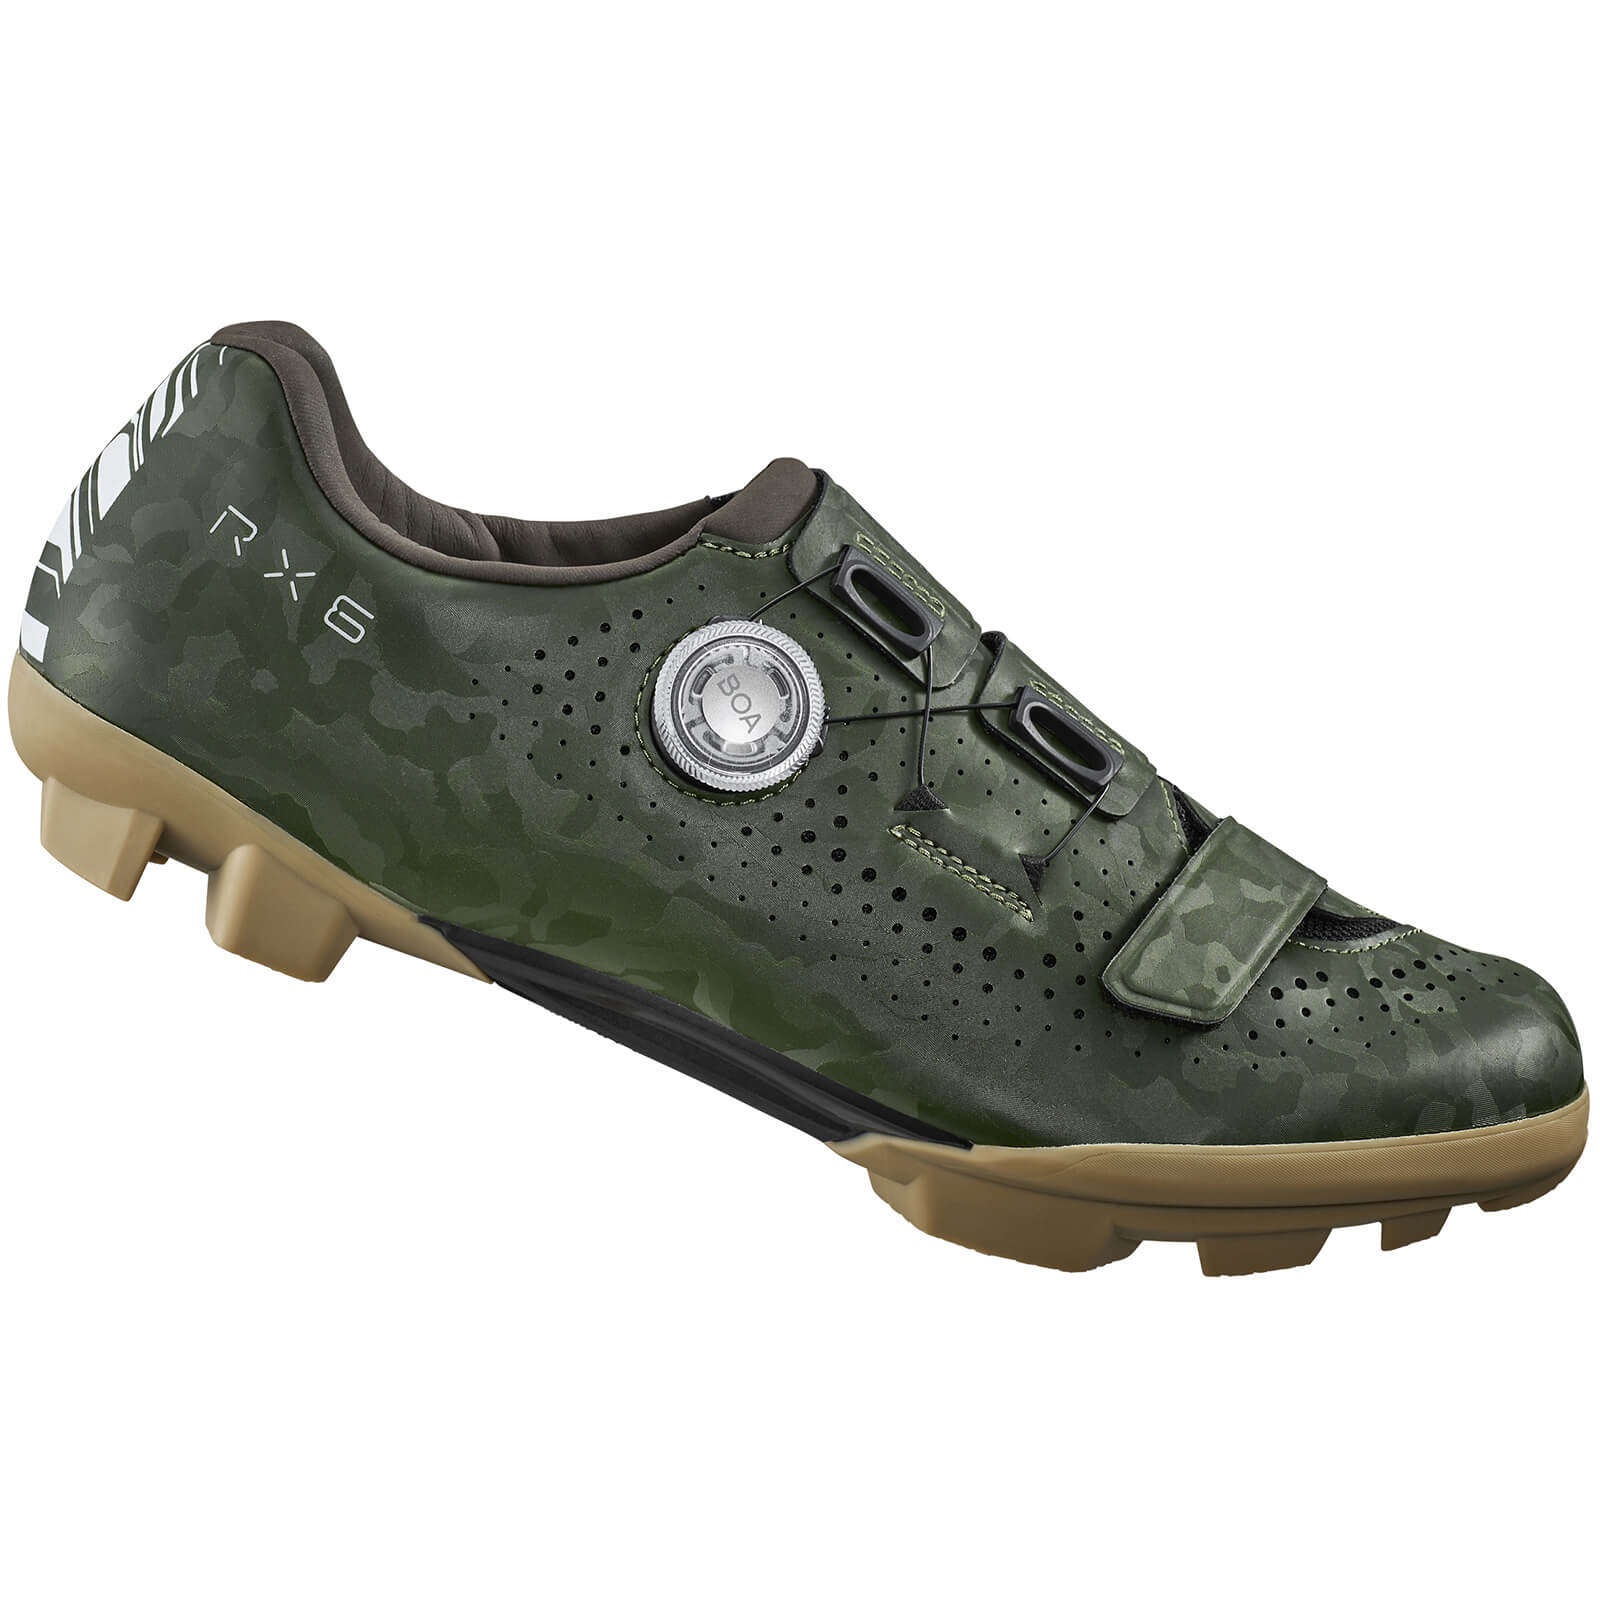 Shimano RX600 Gravel Cycling Shoes - 46 - Green